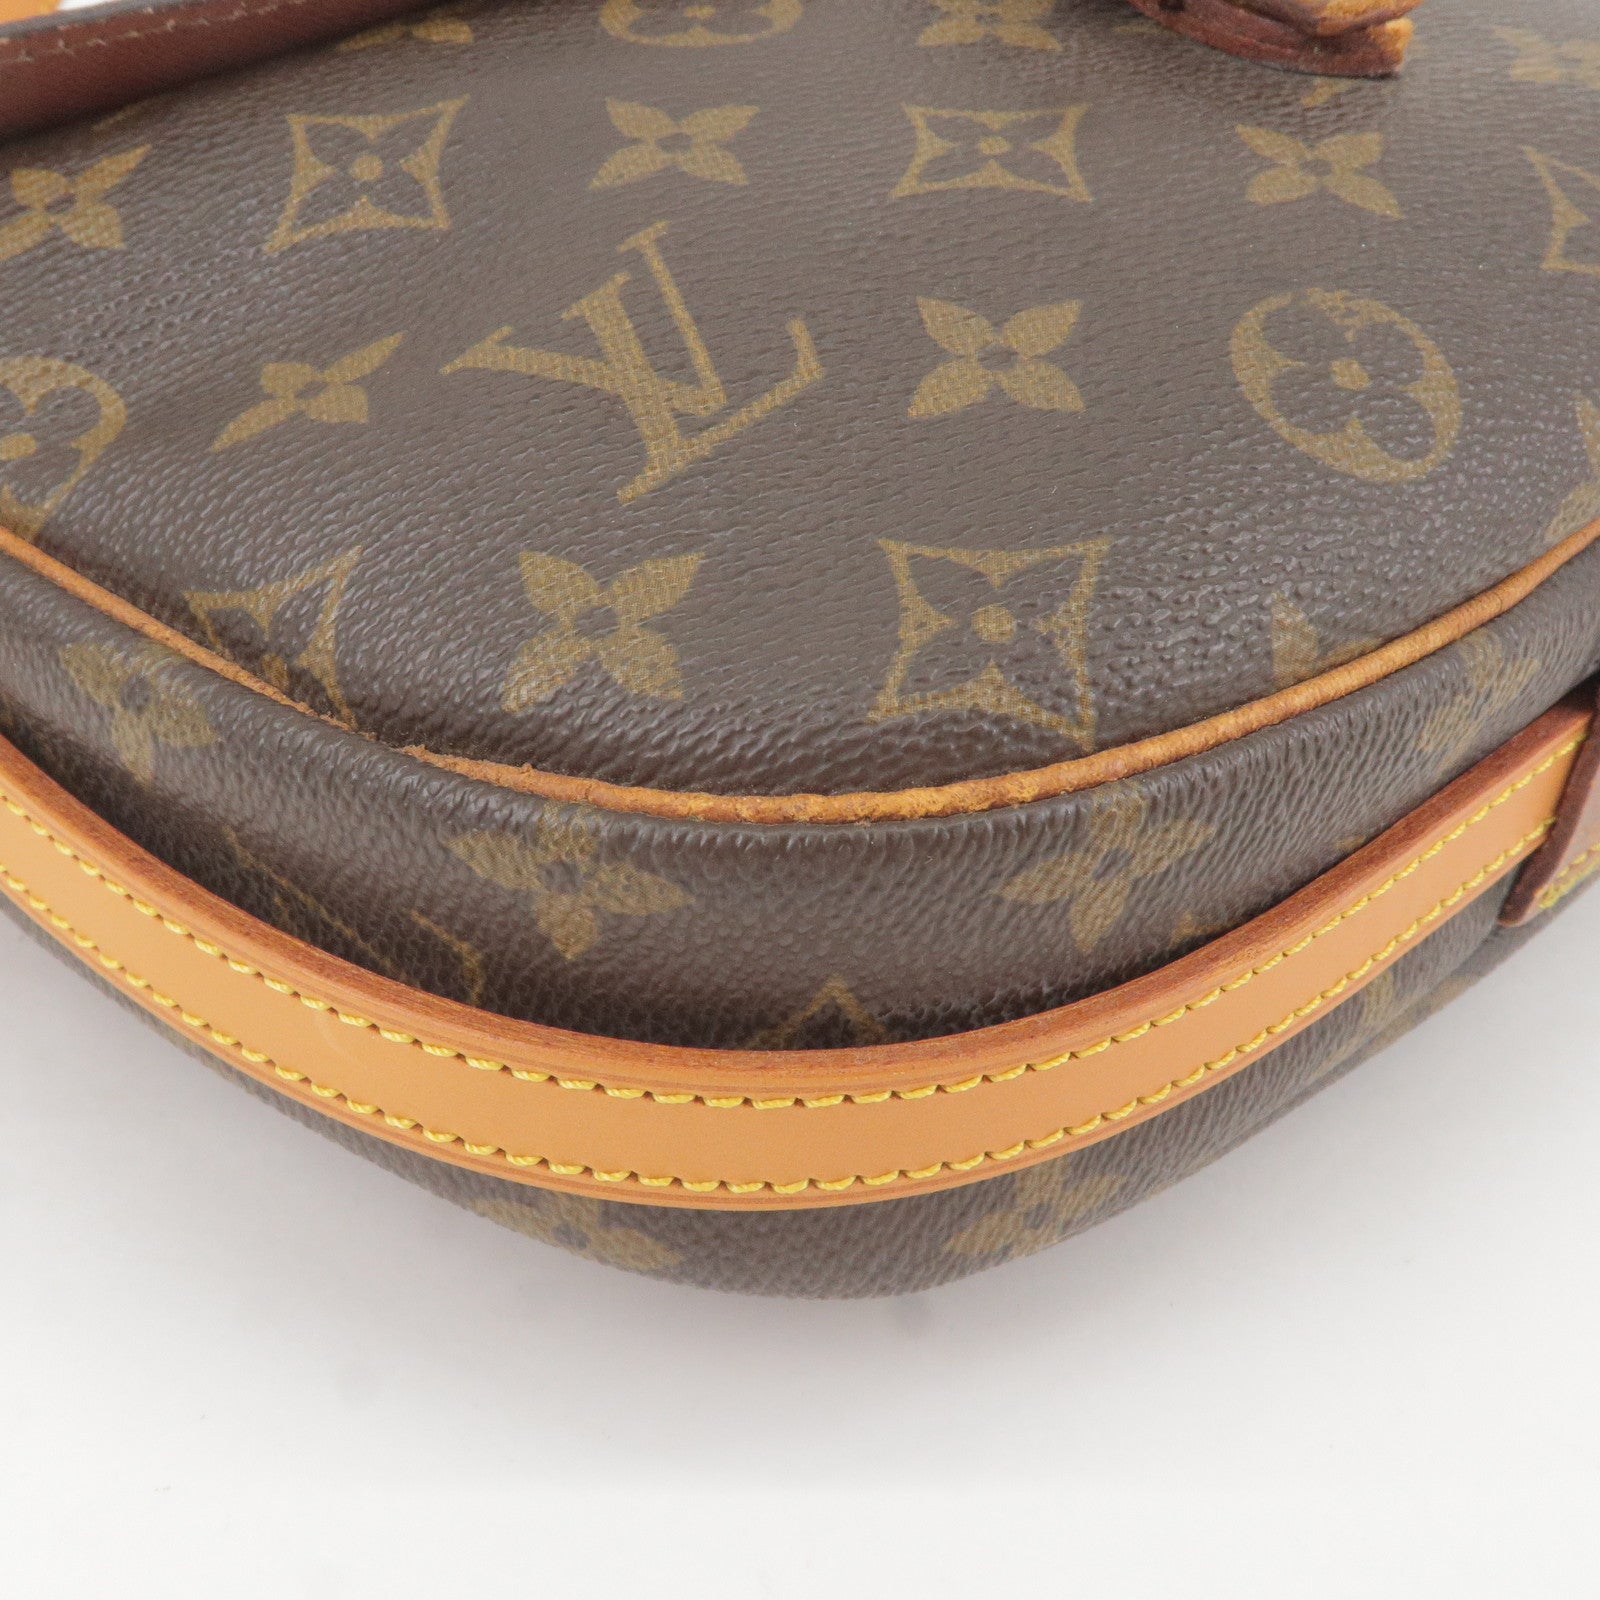 Louis Vuitton - Alma mm - Monogram - Brown - Women - Handbag - Luxury